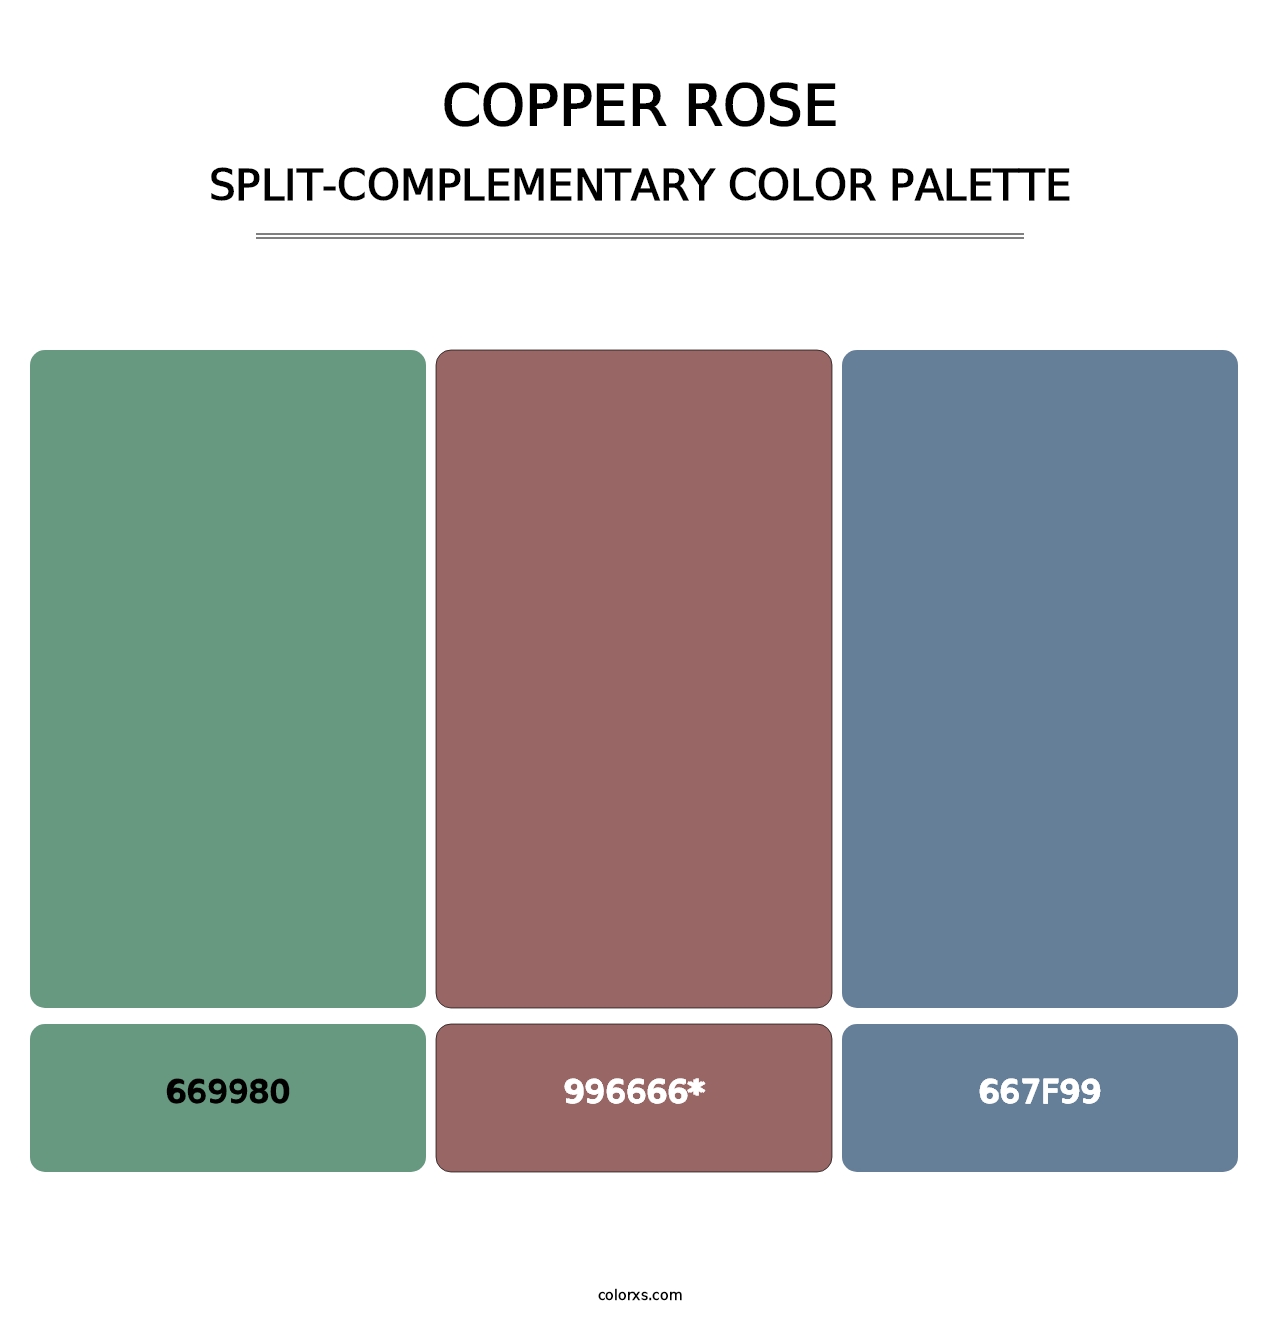 Copper rose - Split-Complementary Color Palette